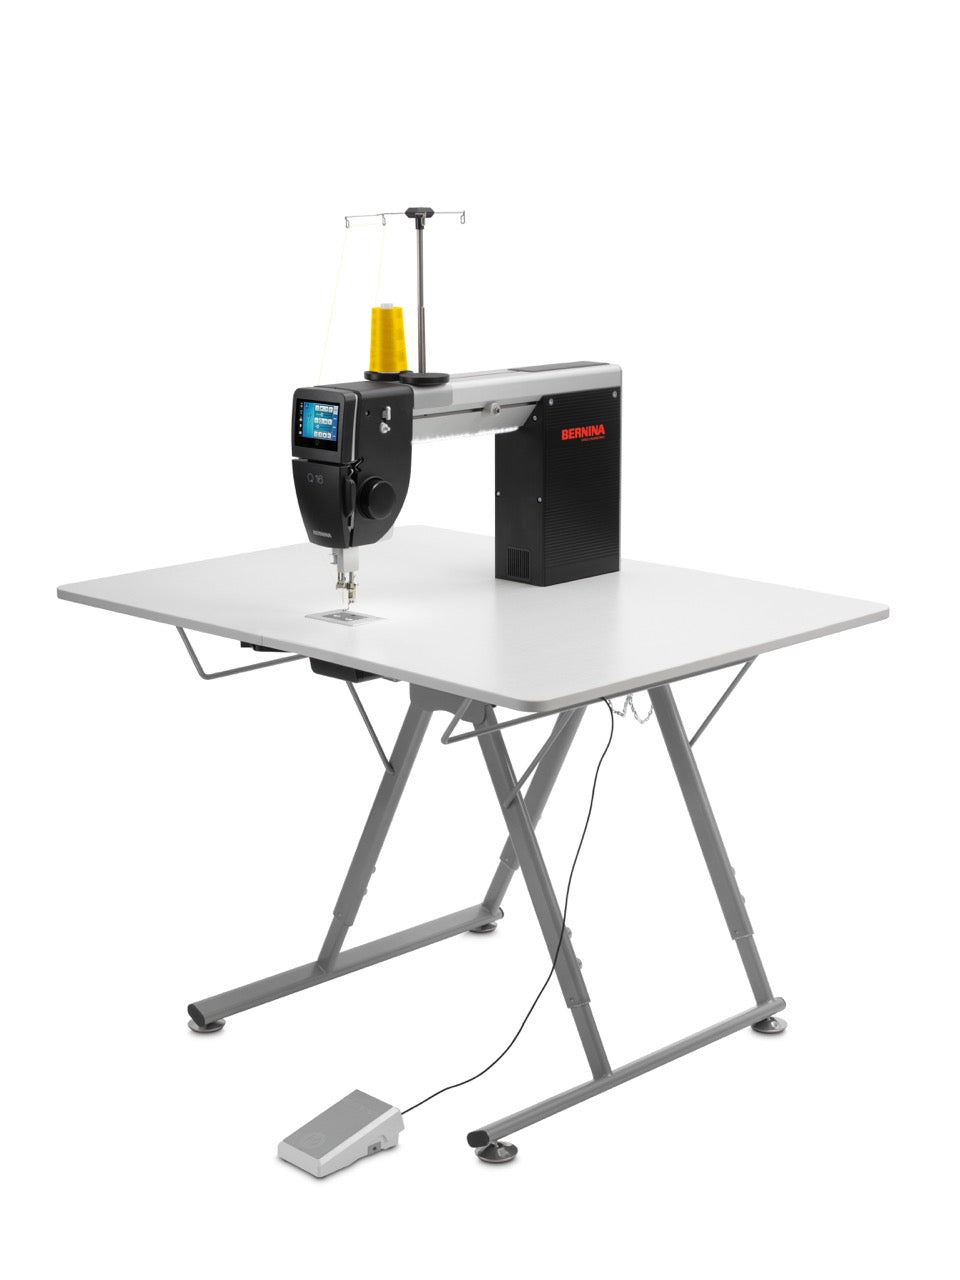 Bernina Q16 longarm sewing machine on sit-down table